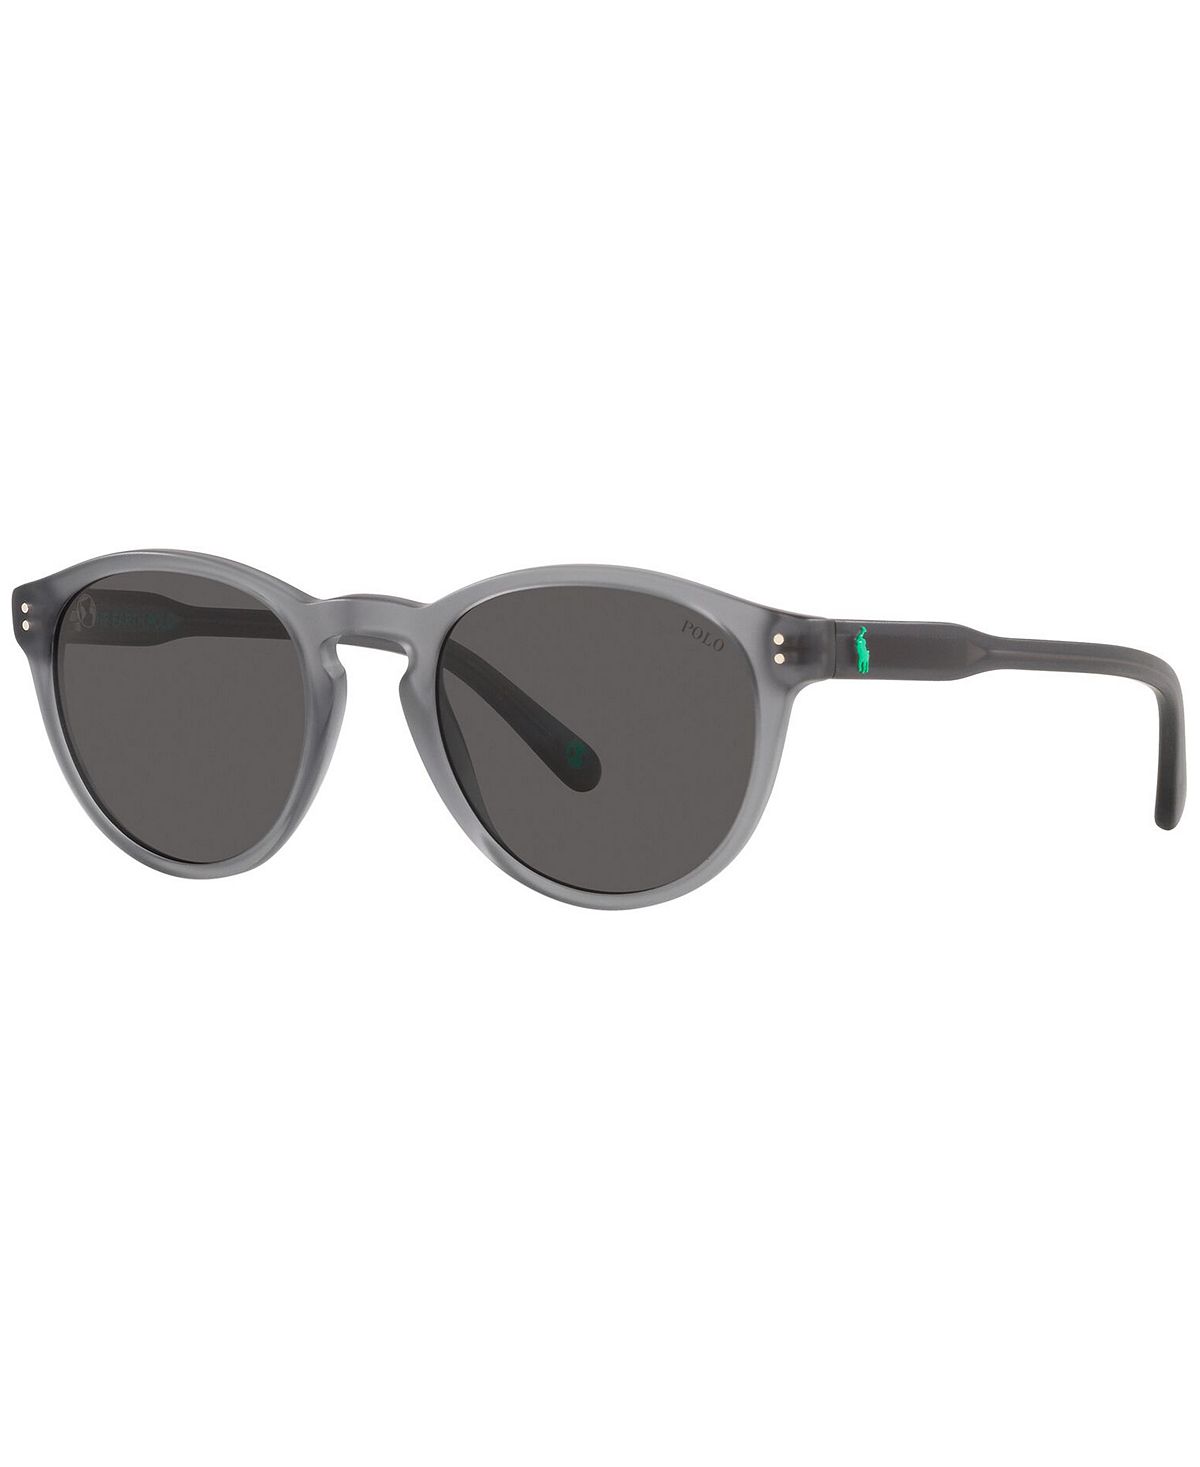 Мужские солнцезащитные очки, PH4172 50 Polo Ralph Lauren woodville gross cappucino dark grey